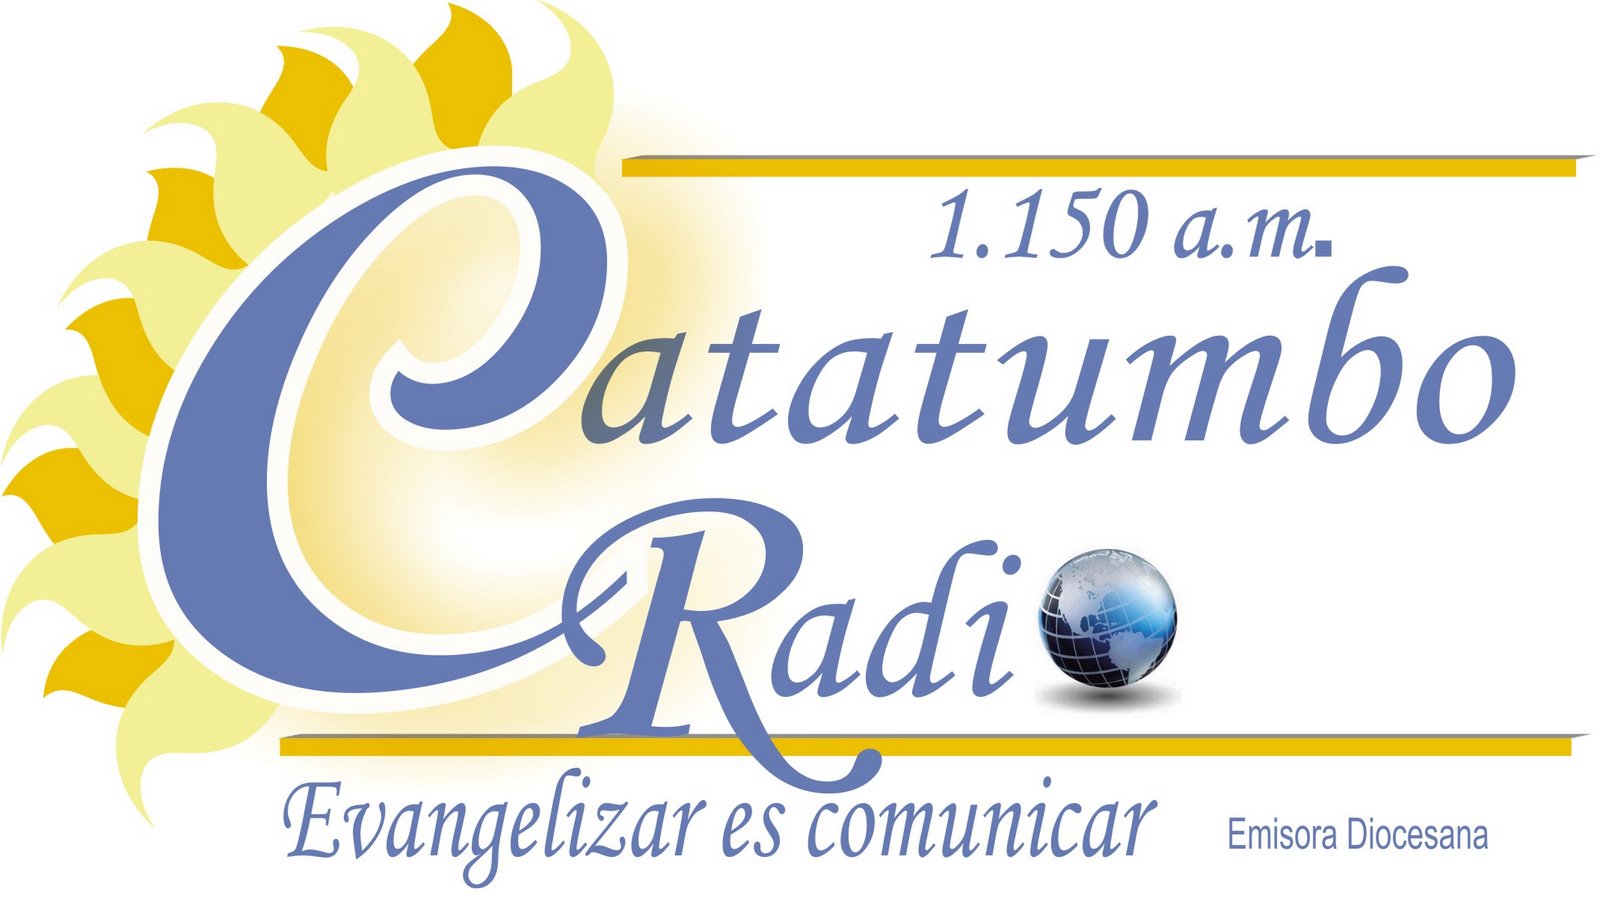 CATATUMBO RADIO 1150 A.M